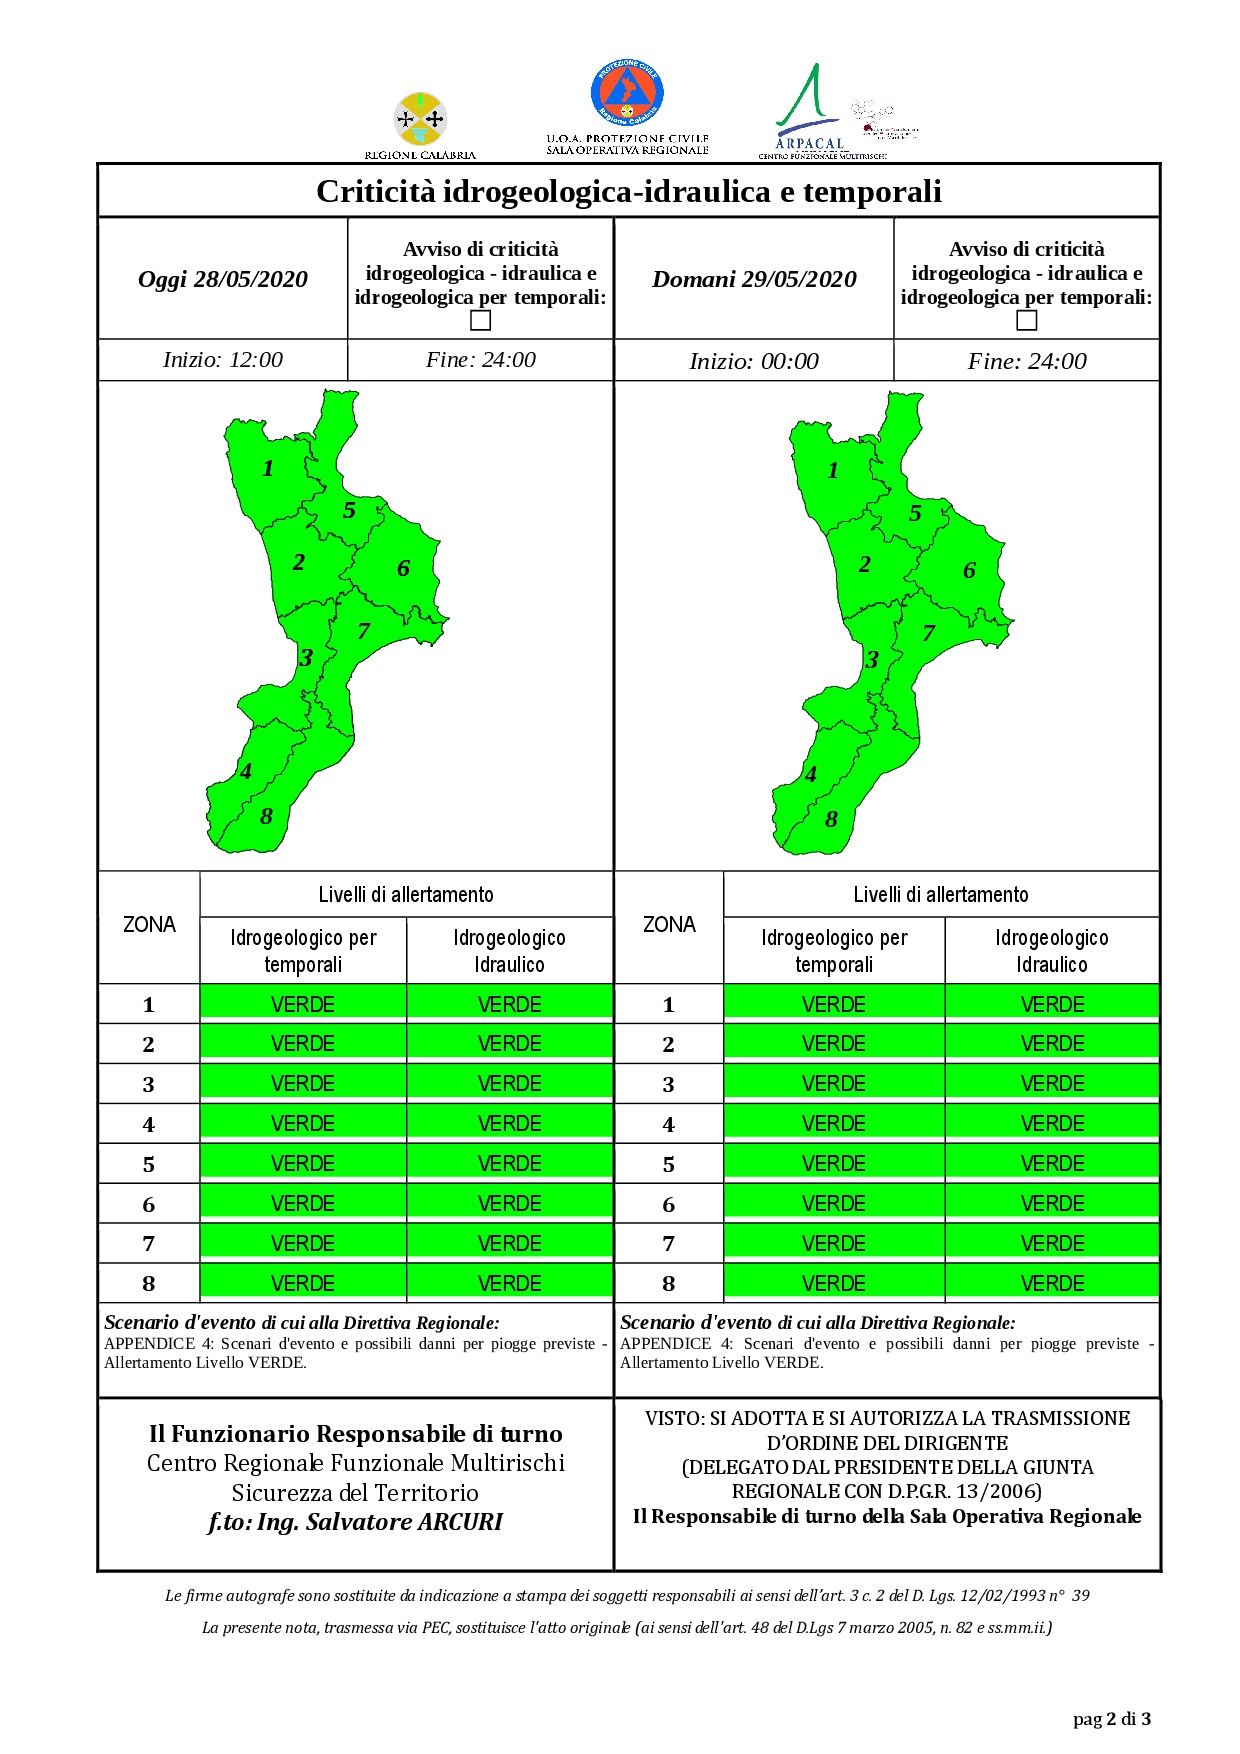 Criticità idrogeologica-idraulica e temporali in Calabria 28-05-2020